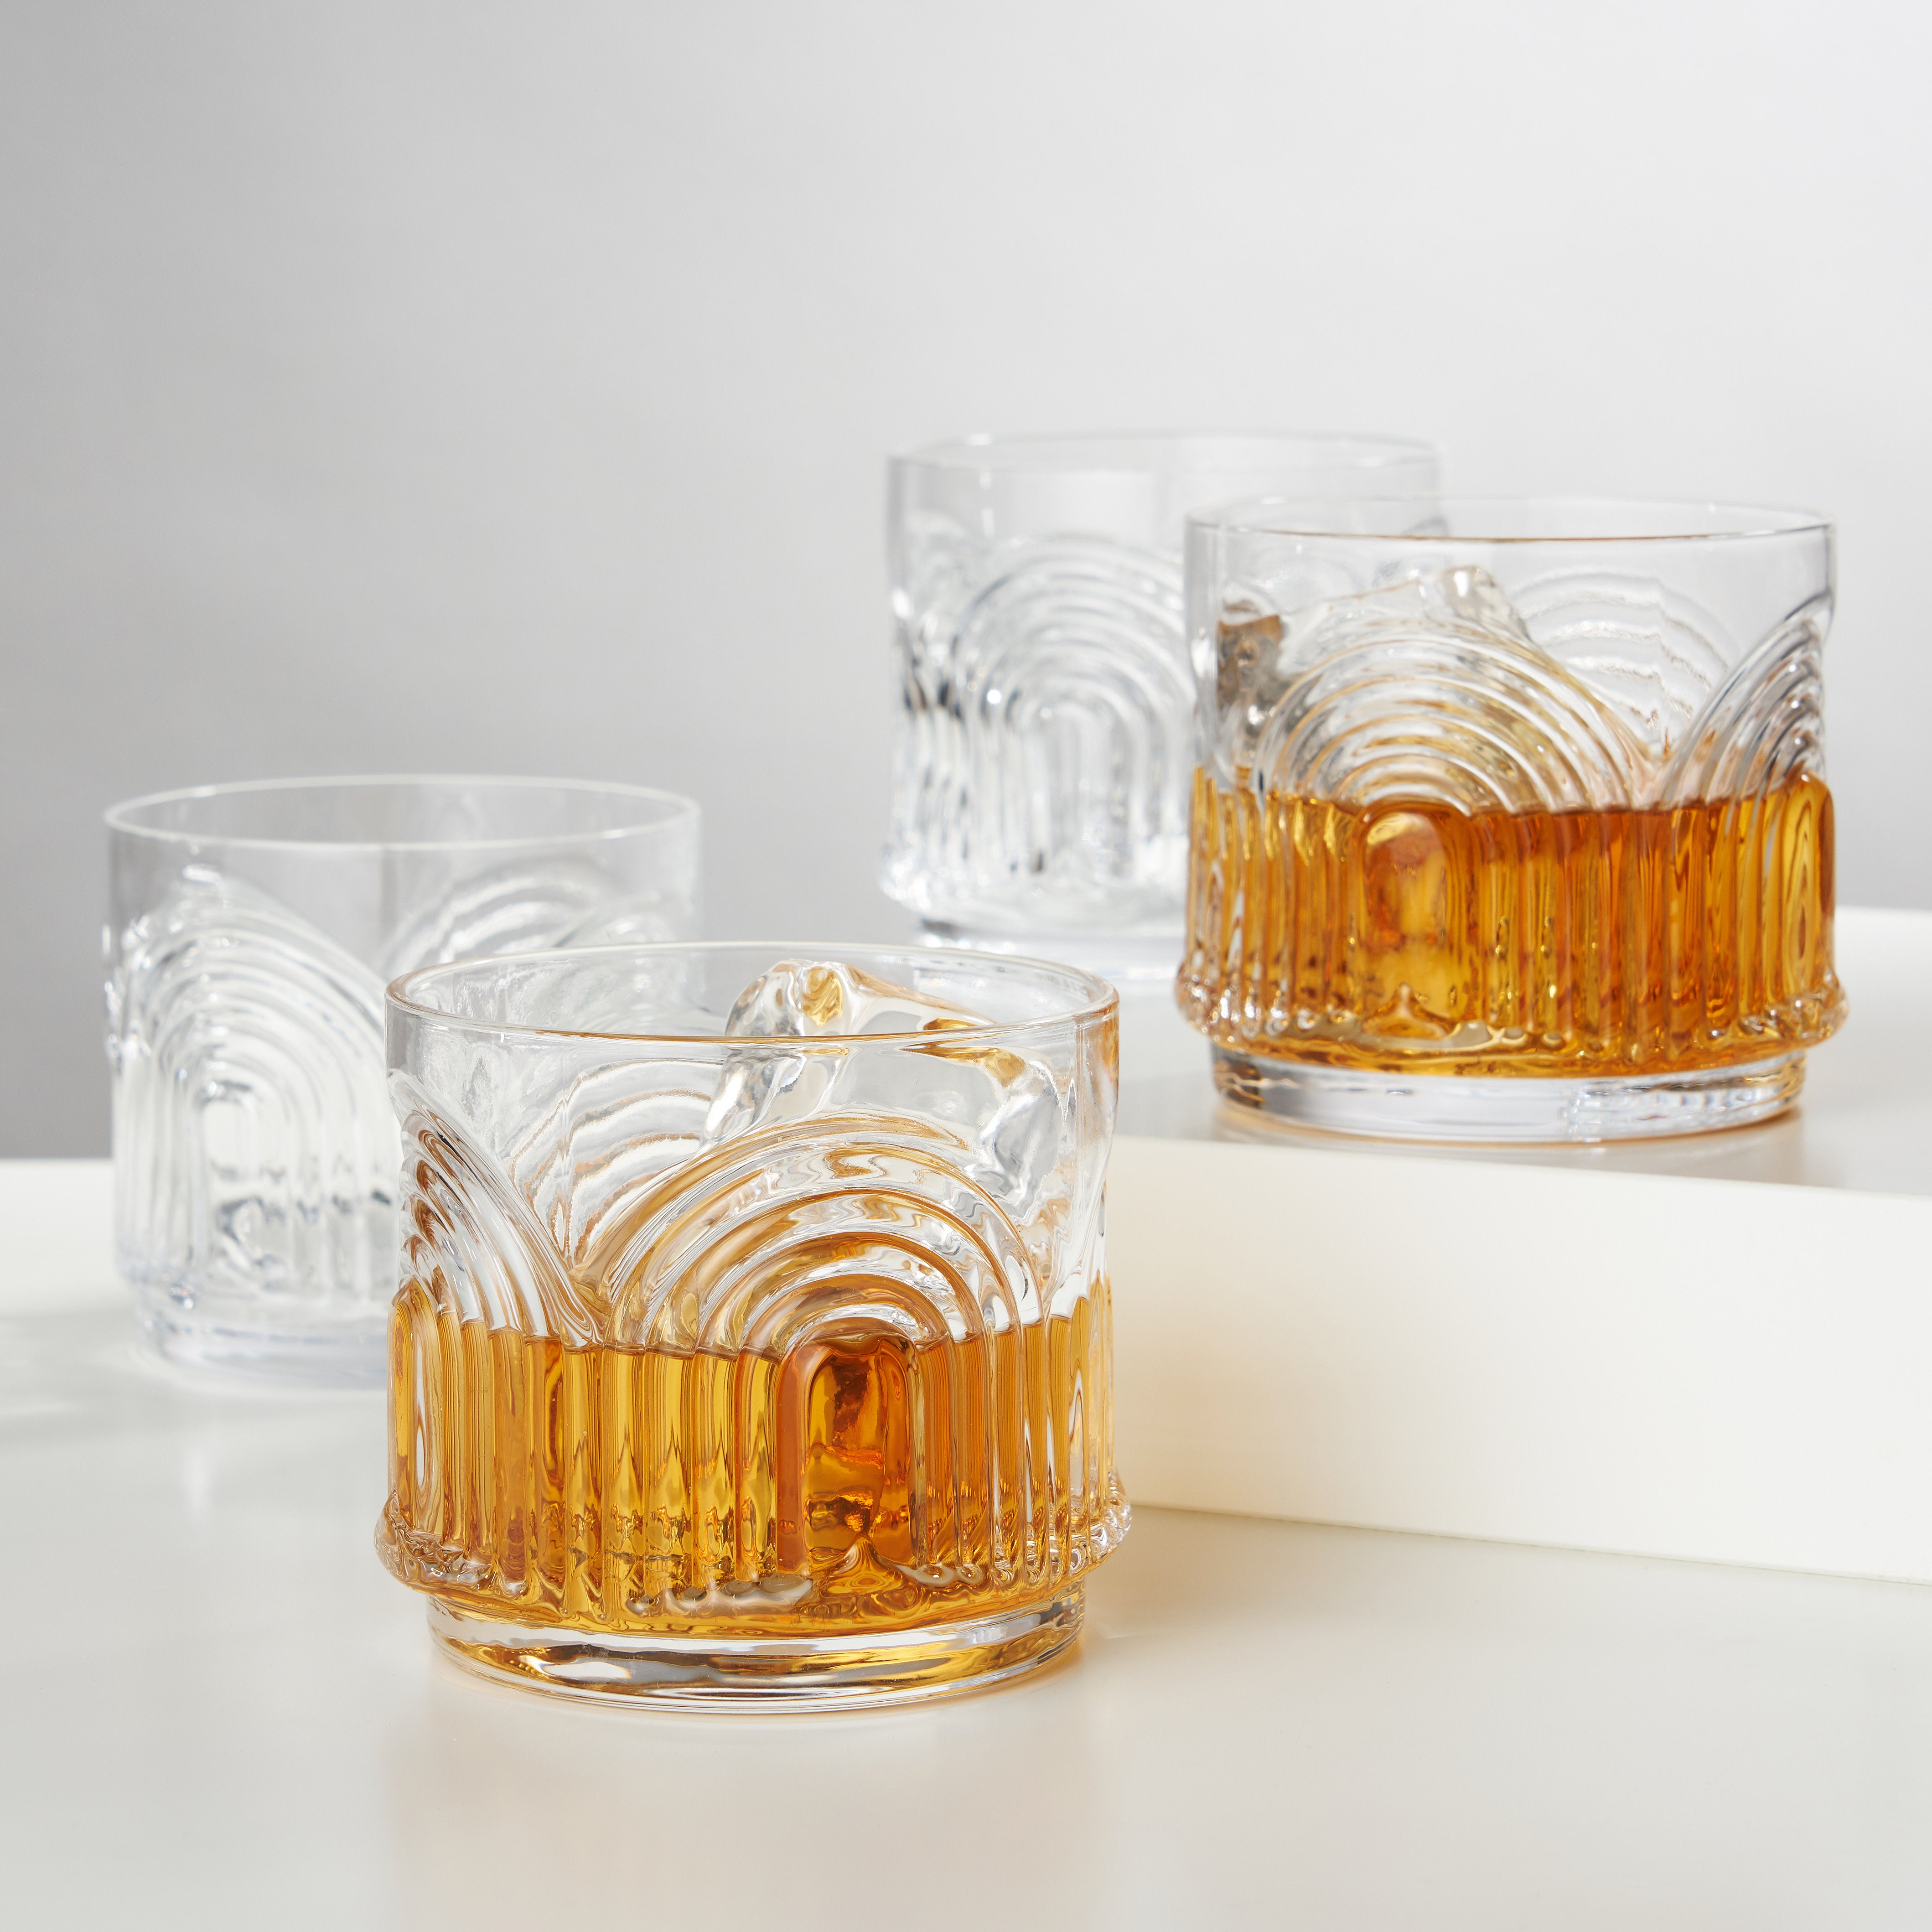 Viski Beau Stemless Lowball Glasses Set of 4 - Vintage Crystal Drinking  Glasses for Whiskey, Old Fashioned, Scotch & Bourbon, Art Deco Cocktail  Glasses Arch Design, 11oz